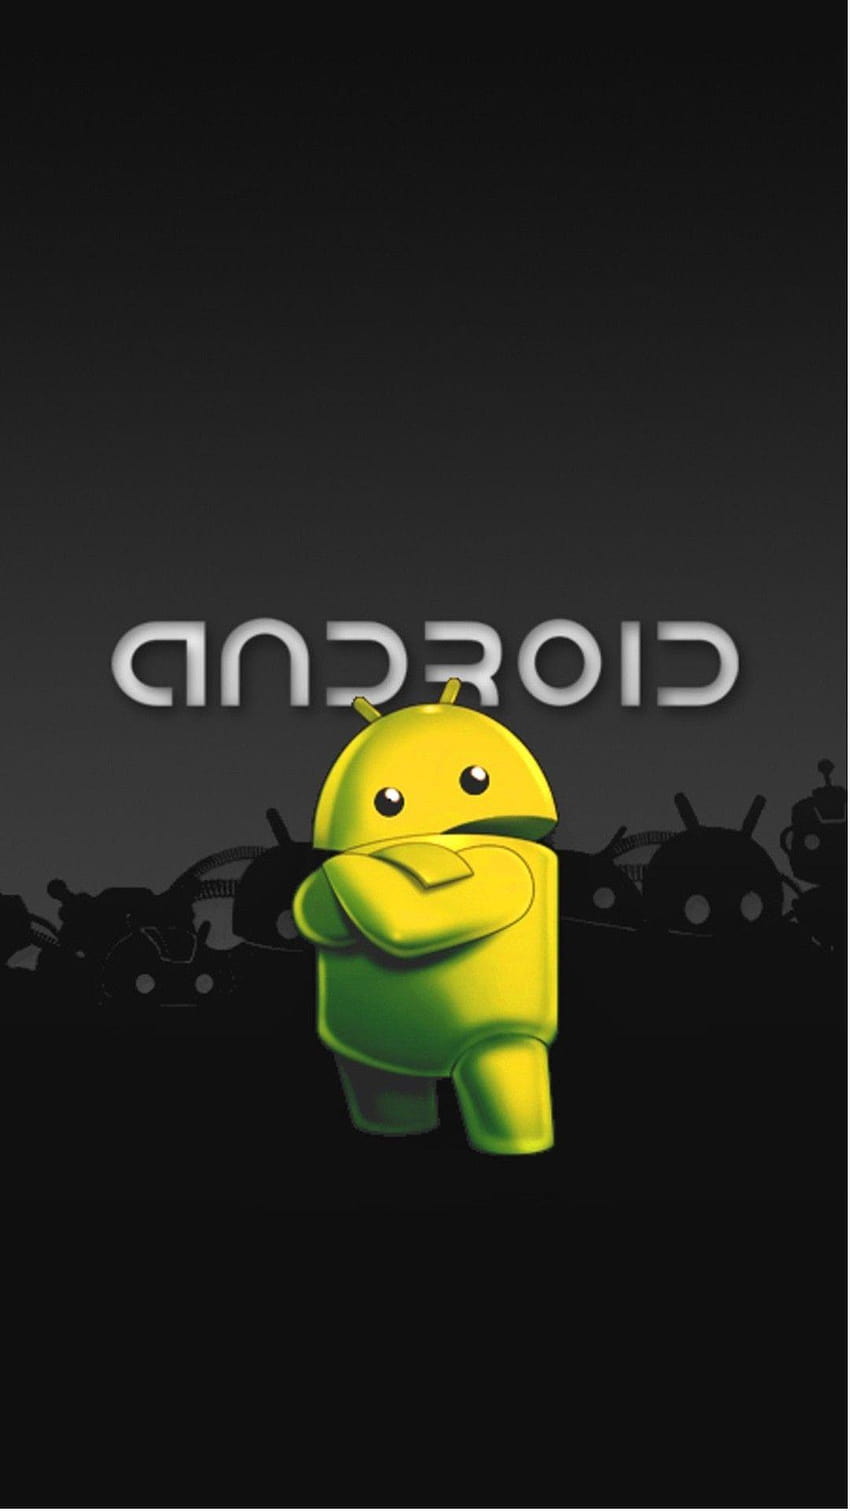 Logotipo de Android Mascot Cool Android, logotipo de Samsung Galaxy fondo de pantalla del teléfono